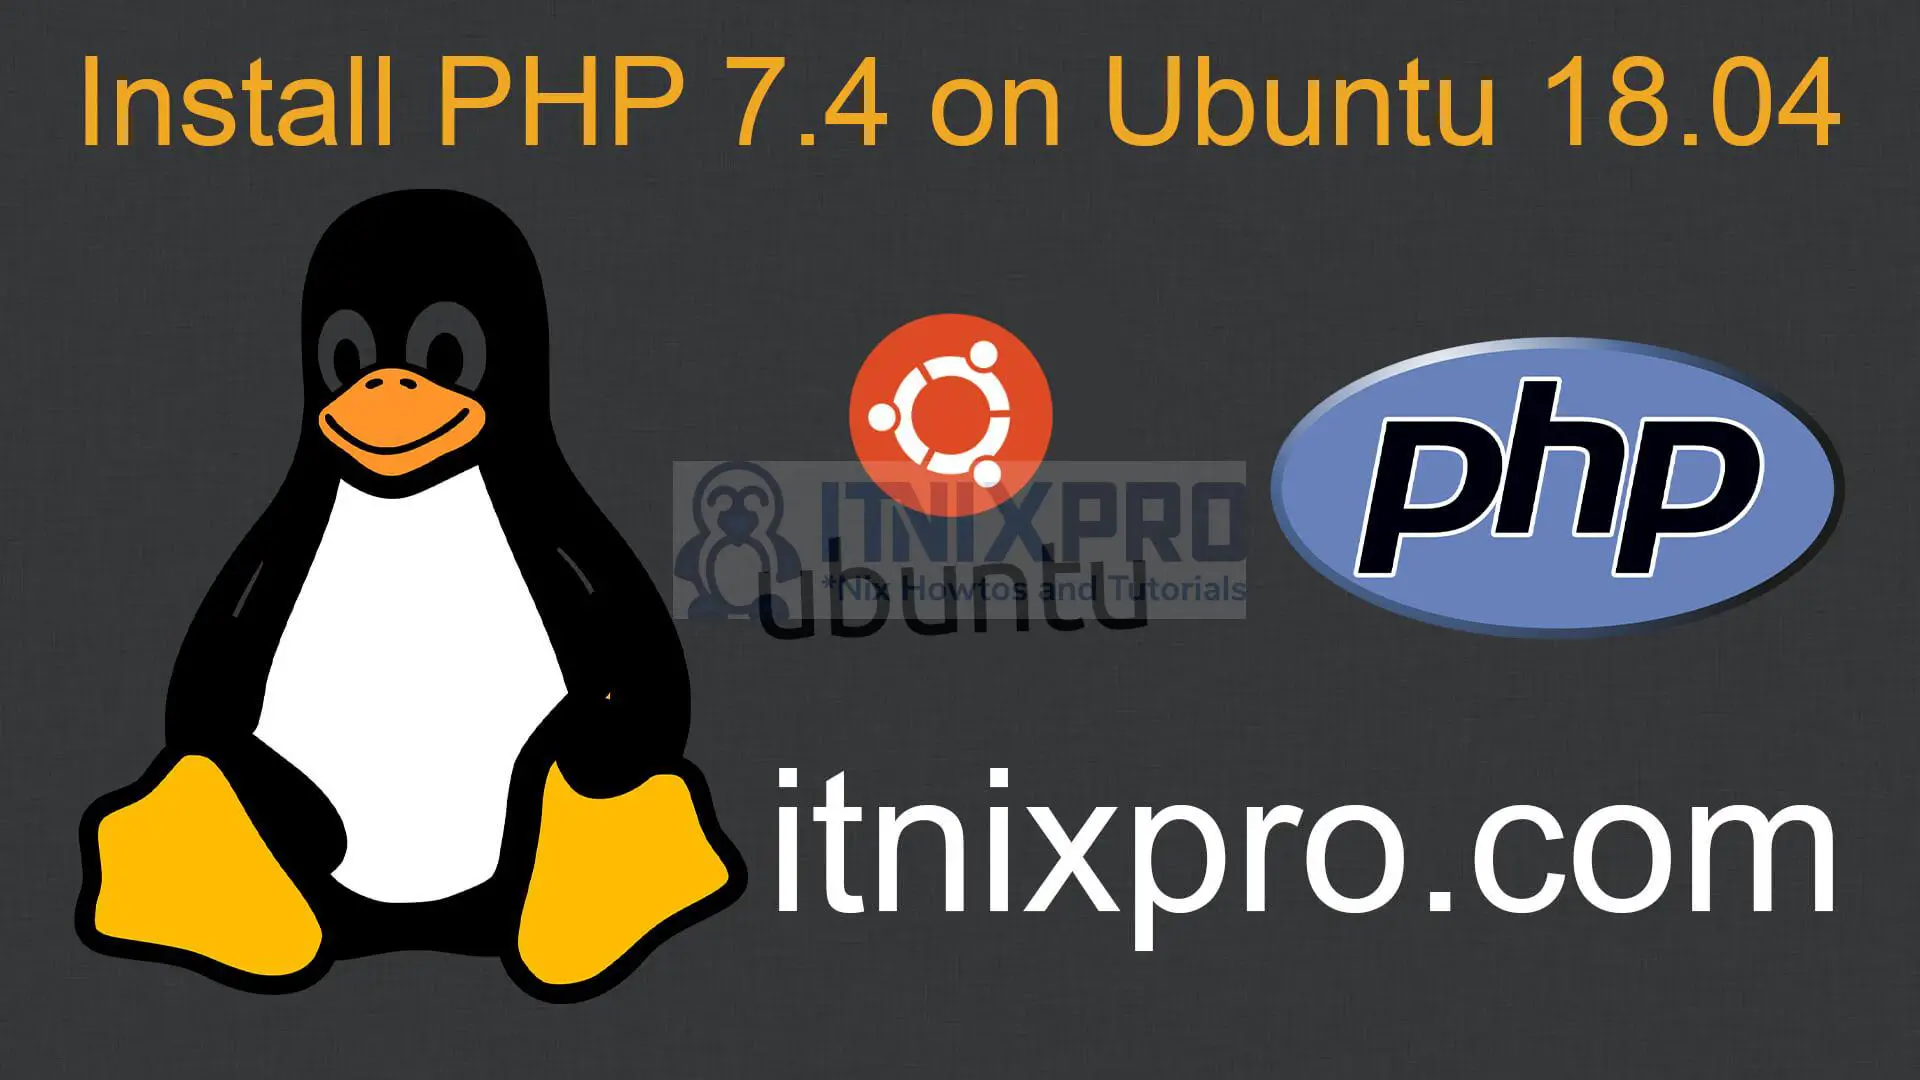 Install PHP 7.4 on Ubuntu 18.04